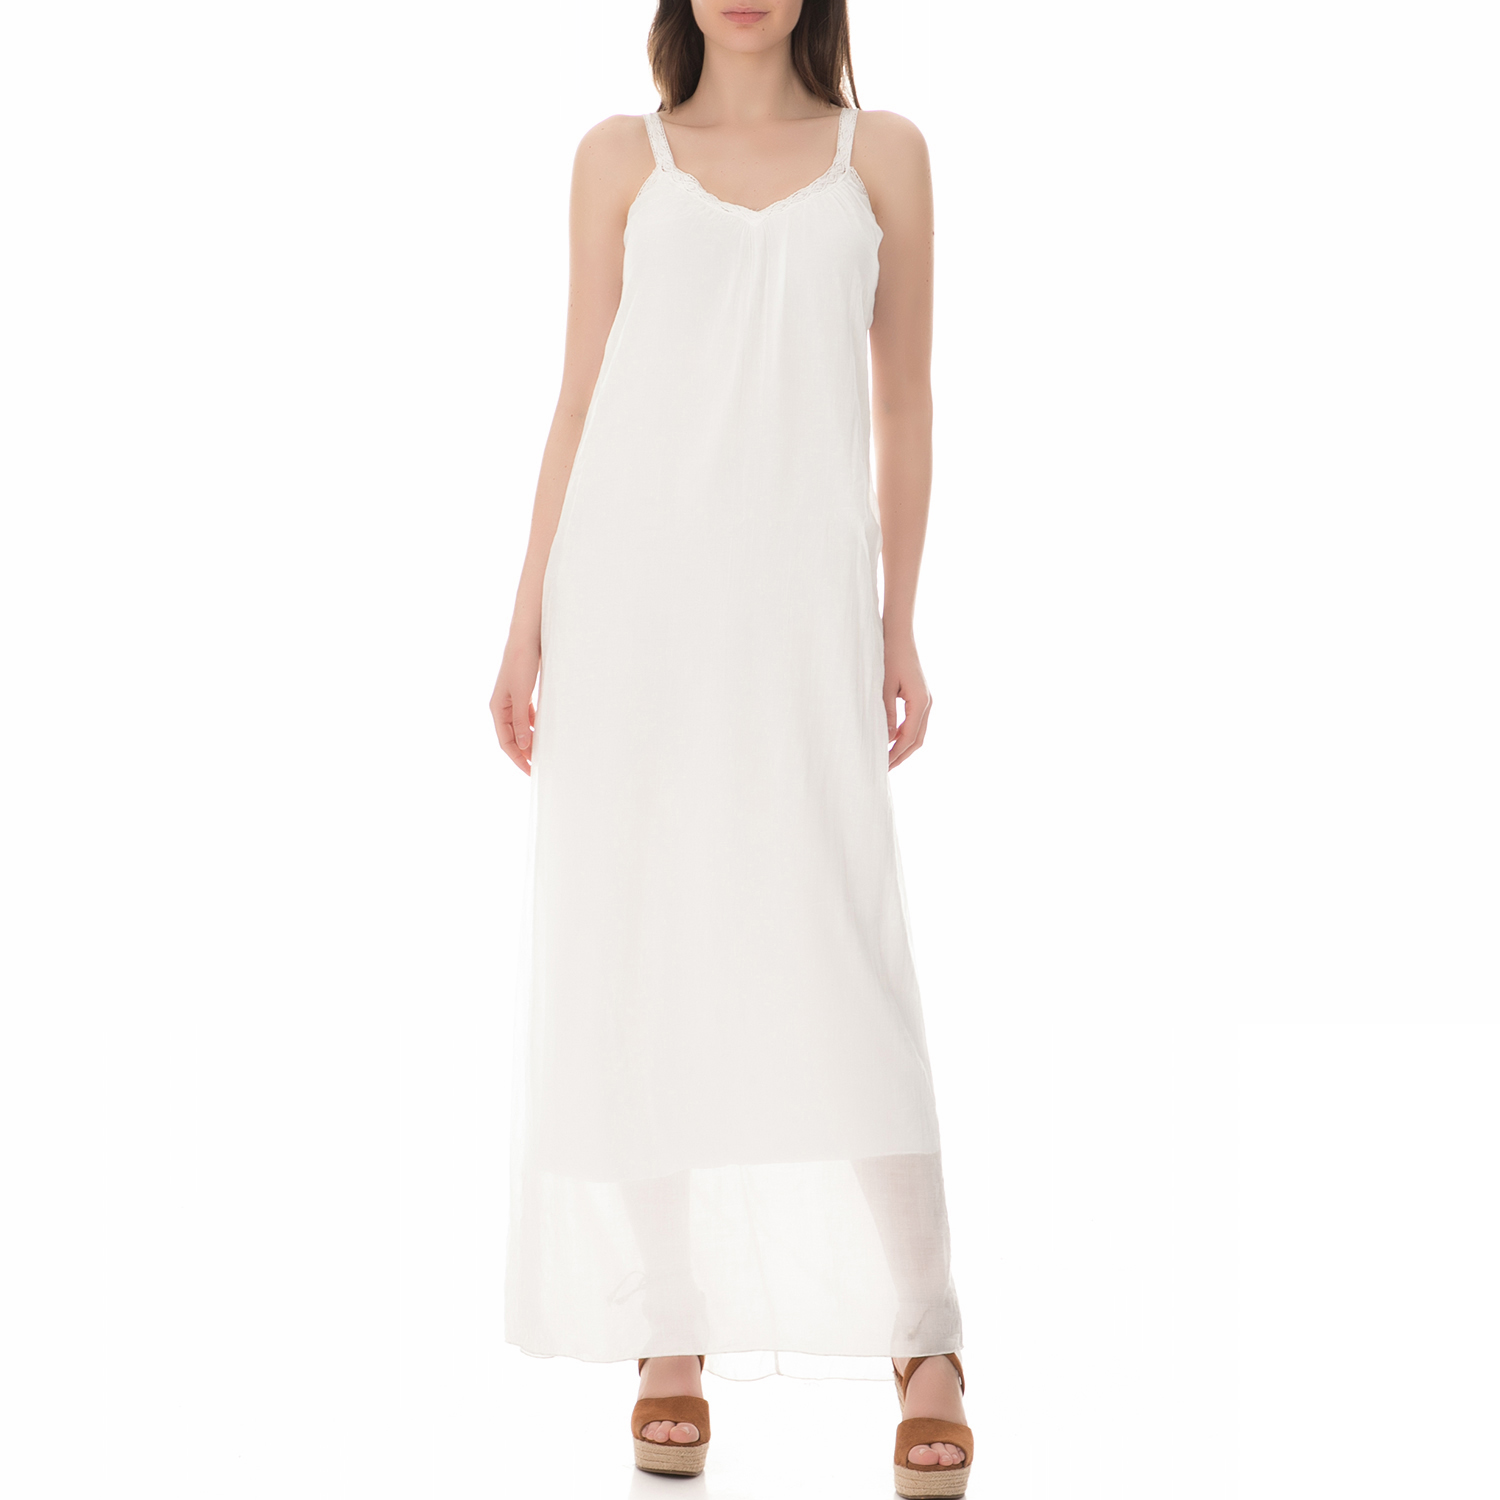 BRAEZ - Γυναικείο μάξι φόρεμα BRAEZ λευκό Γυναικεία/Ρούχα/Φορέματα/Μάξι